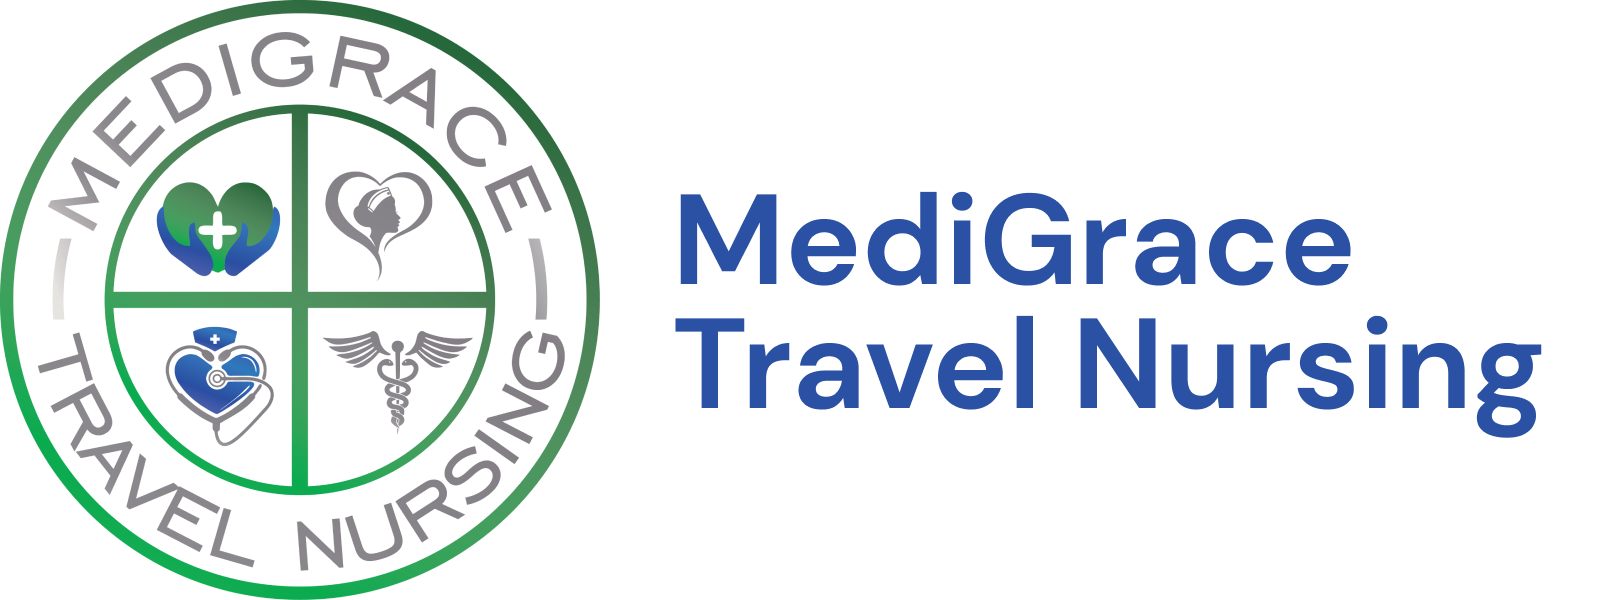 Medigrace Travel Nursing